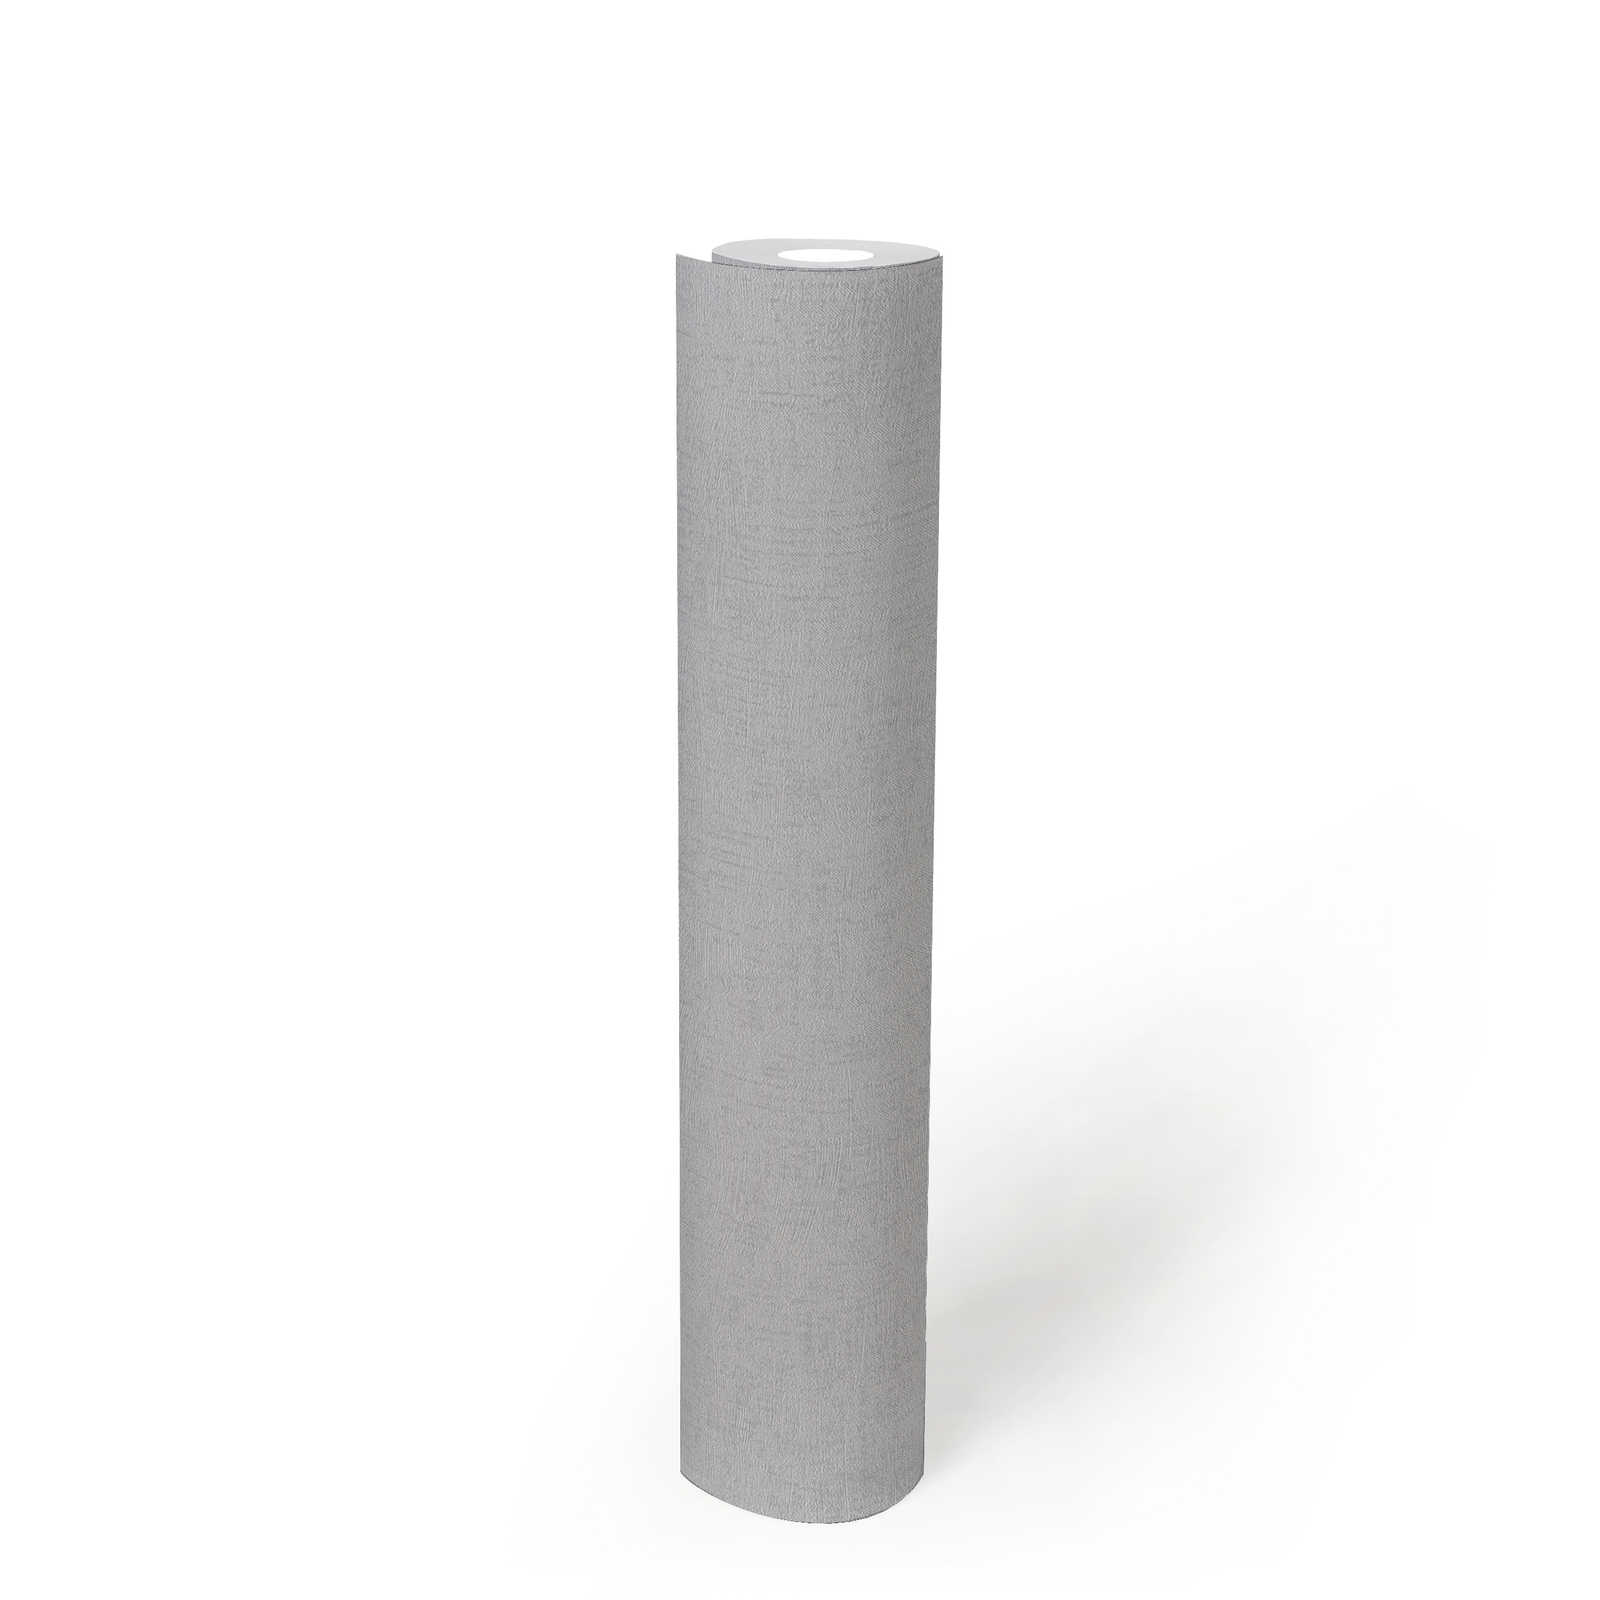             Melange wallpaper plain grey with metallic sheen
        